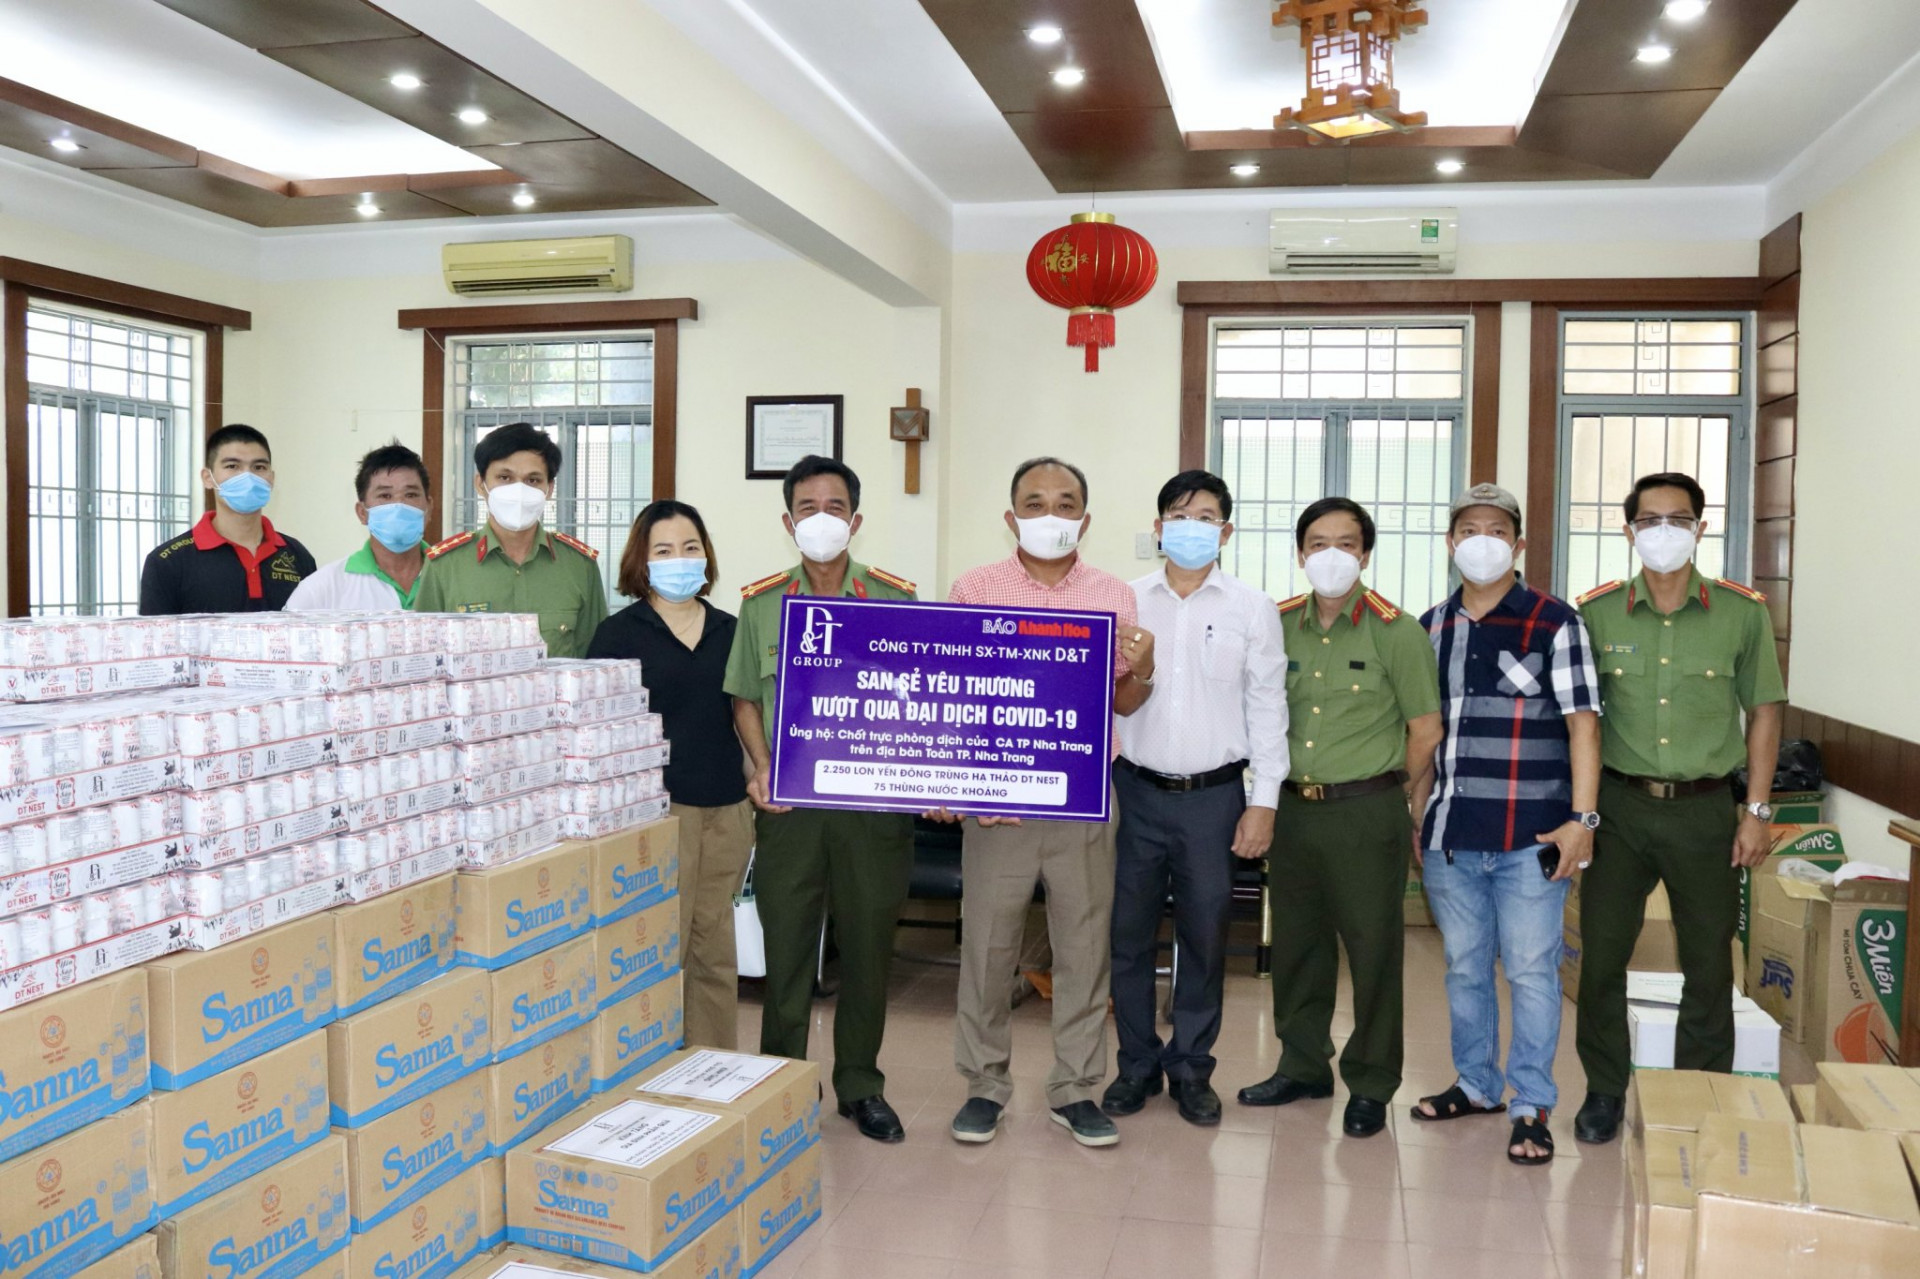 Delegation visiting and offering gifts at Nha Trang City Police